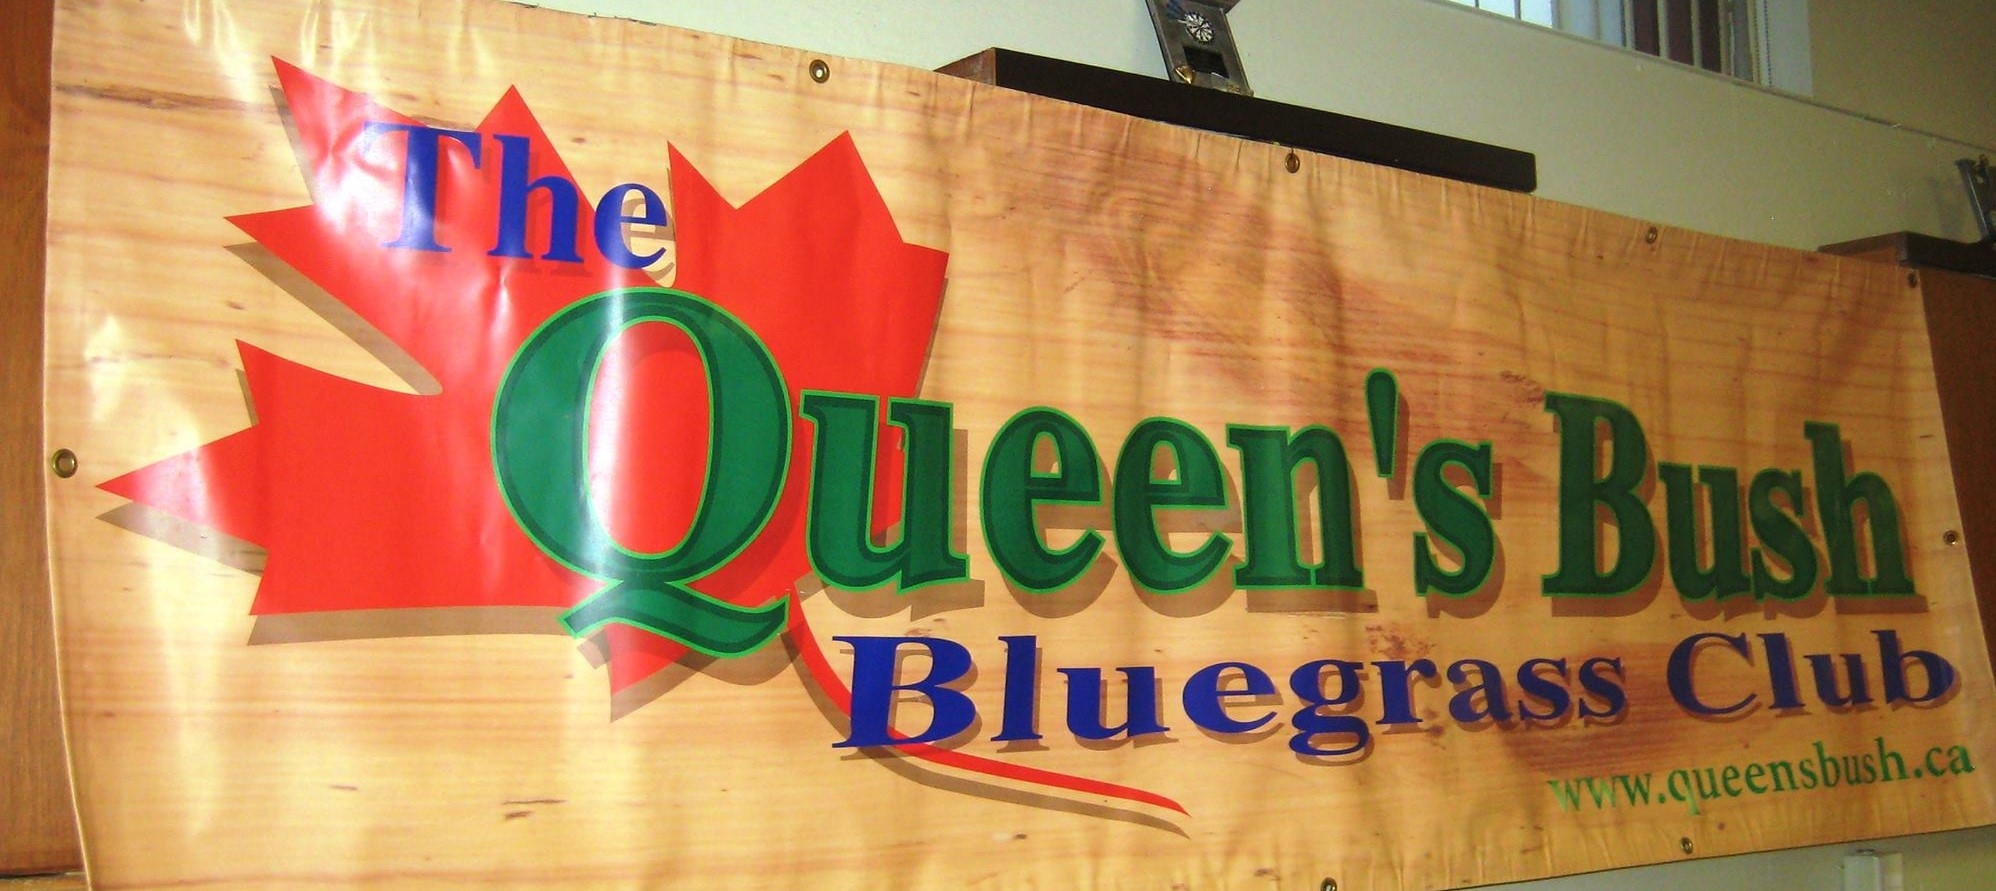 Queensbush Bluegrass Club